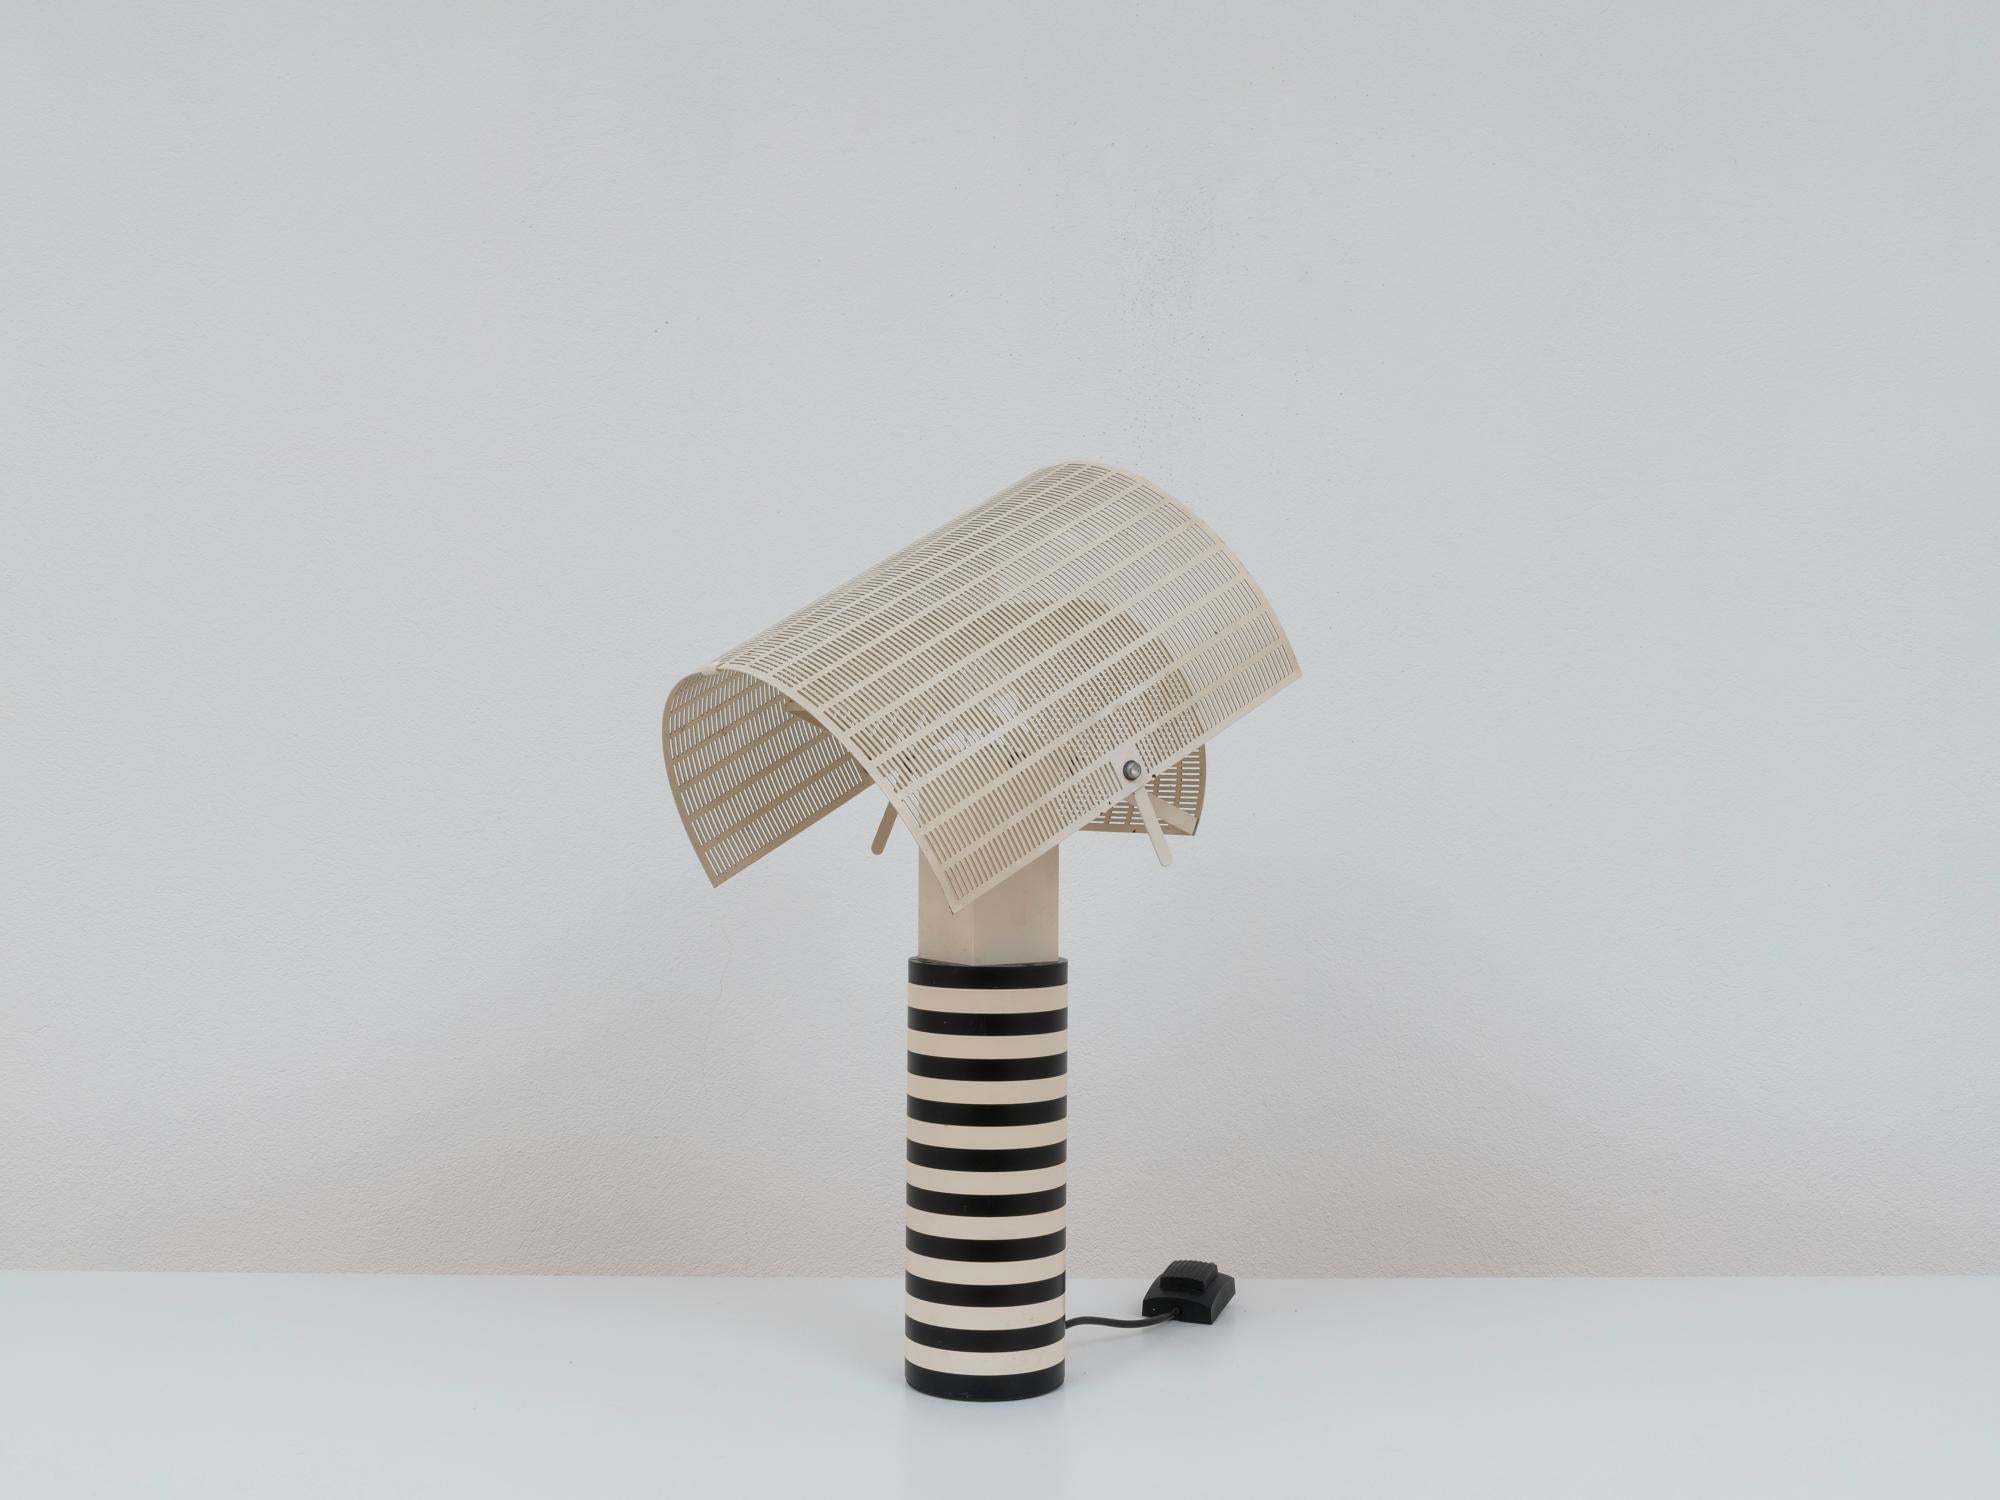 Aluminum Postmodern First Edition “Shogun” Table Lamp by Mario Botta for Artemide 1986